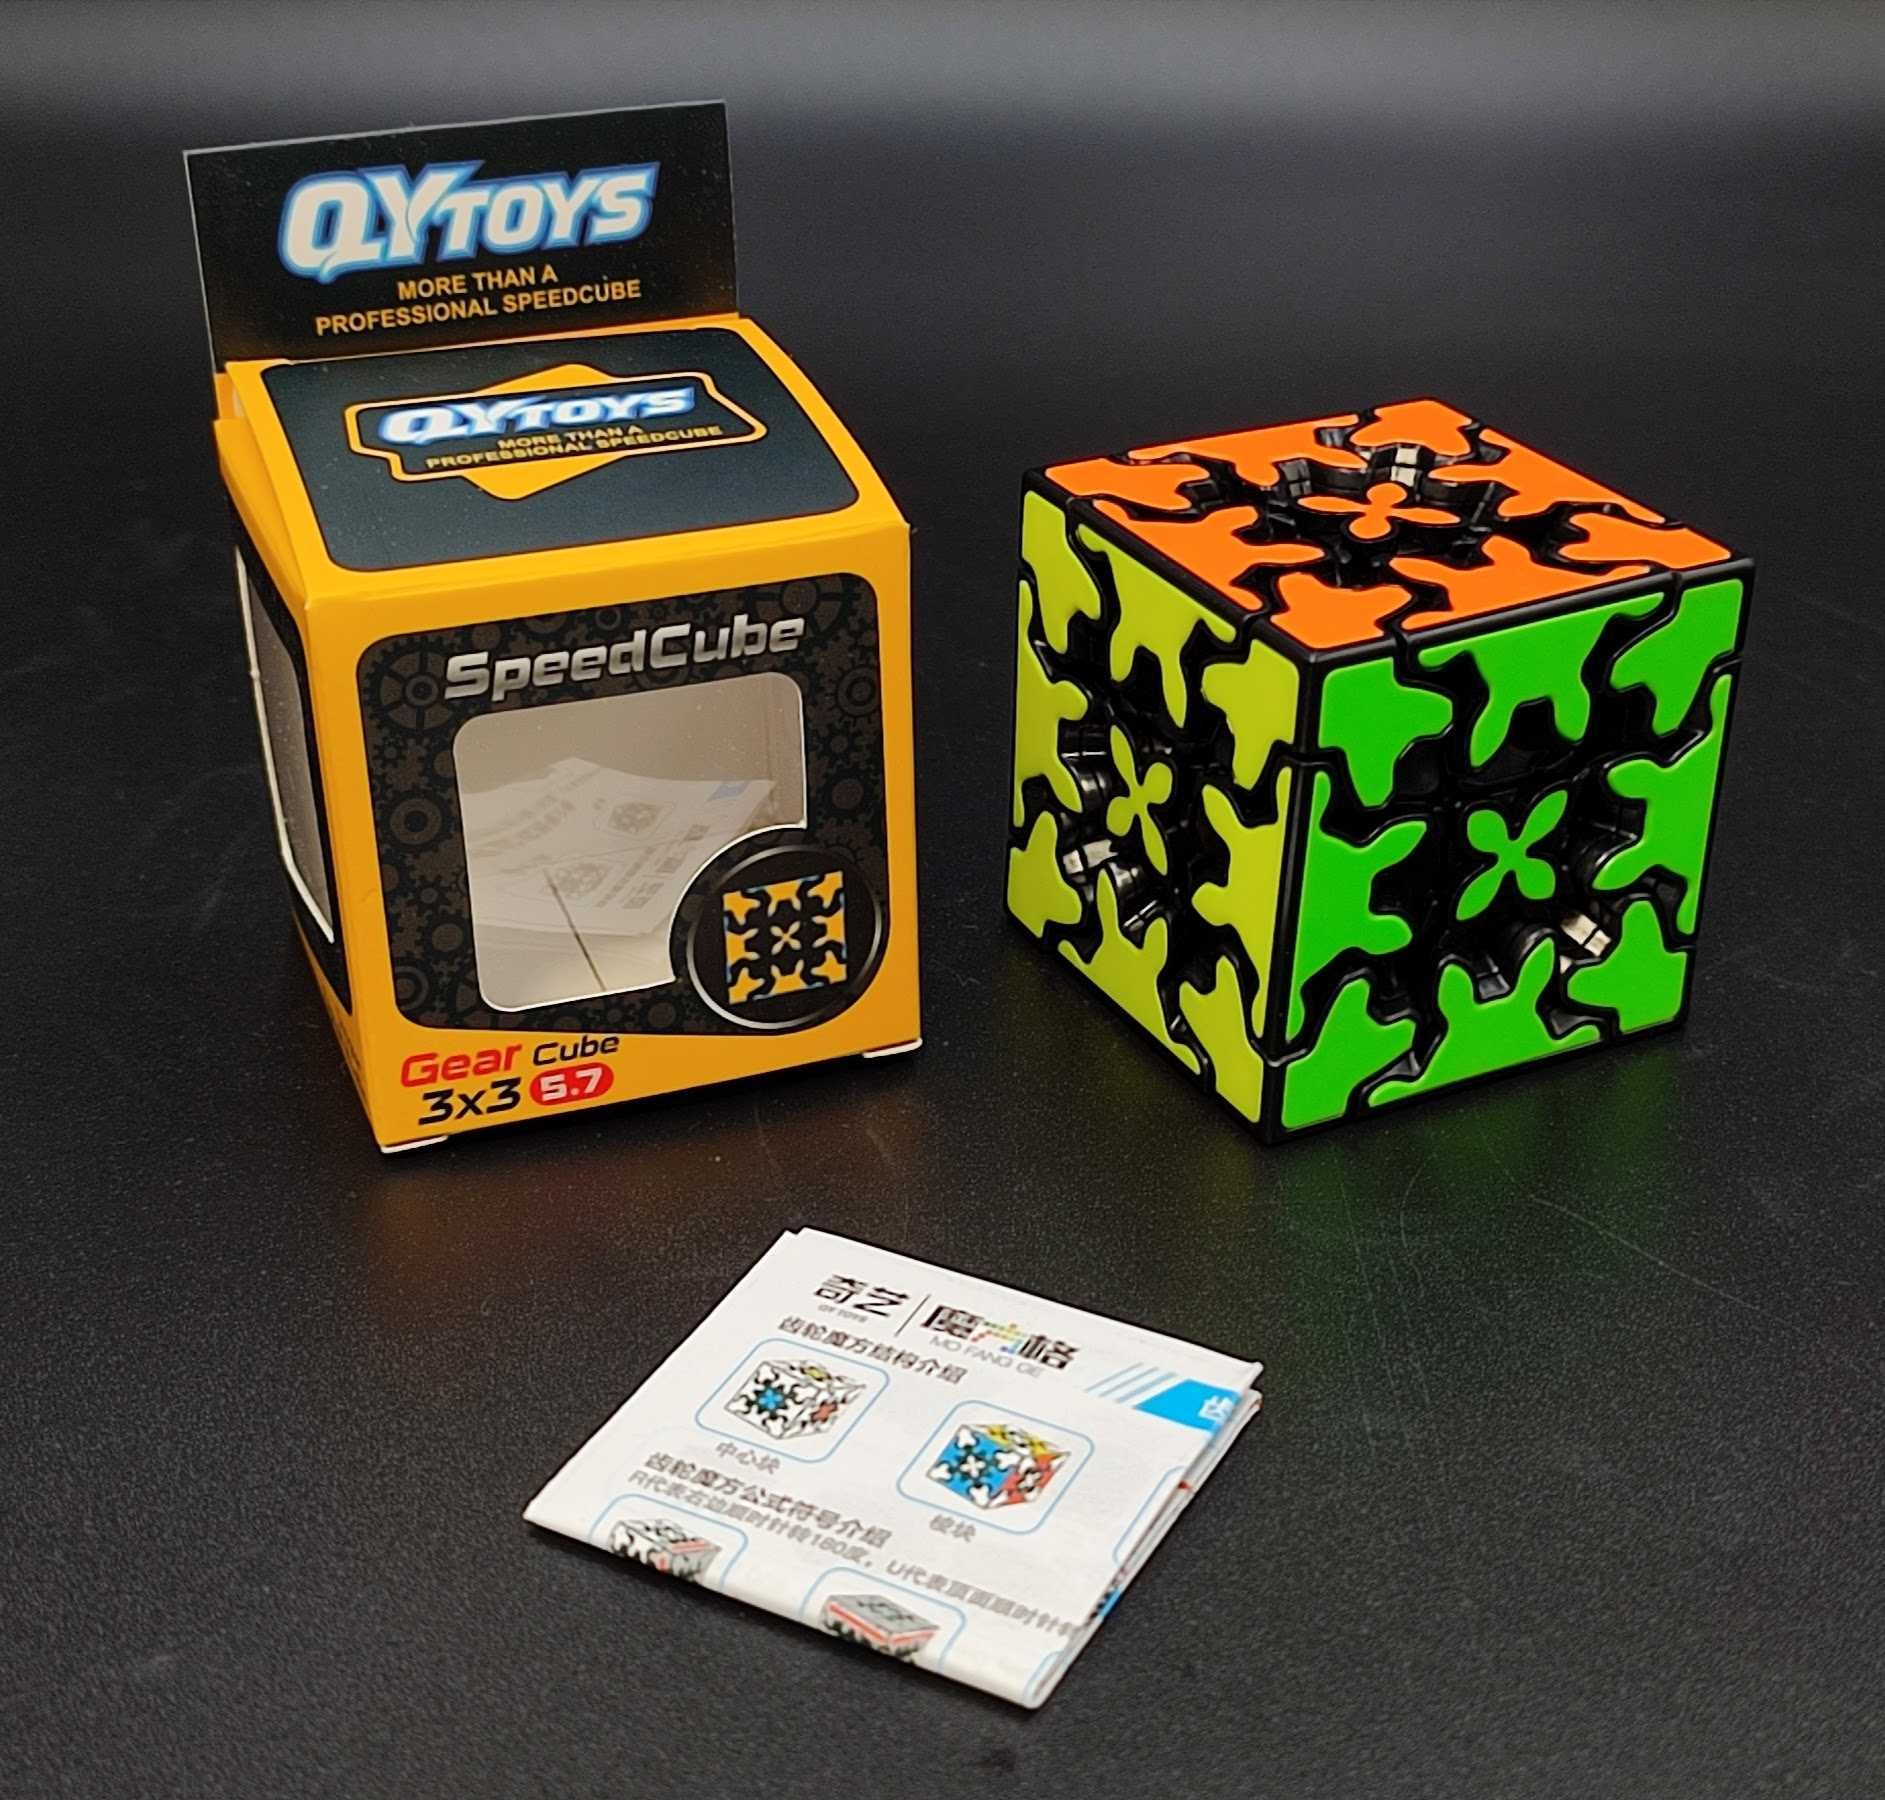 Kostka Gear Cube